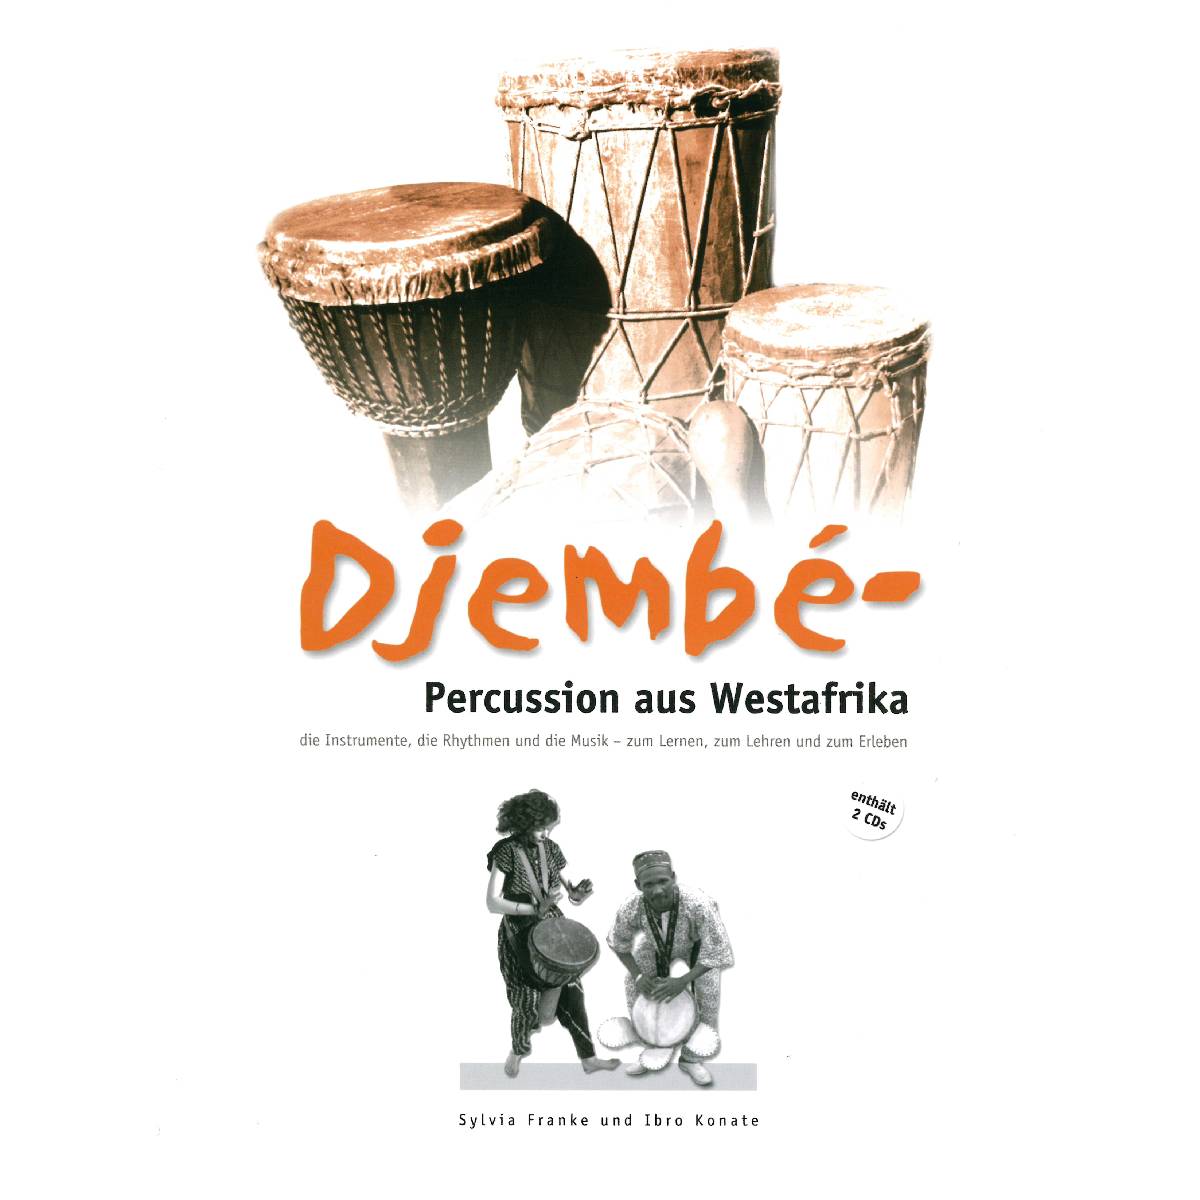 Djembé – Percussion aus Westafrika